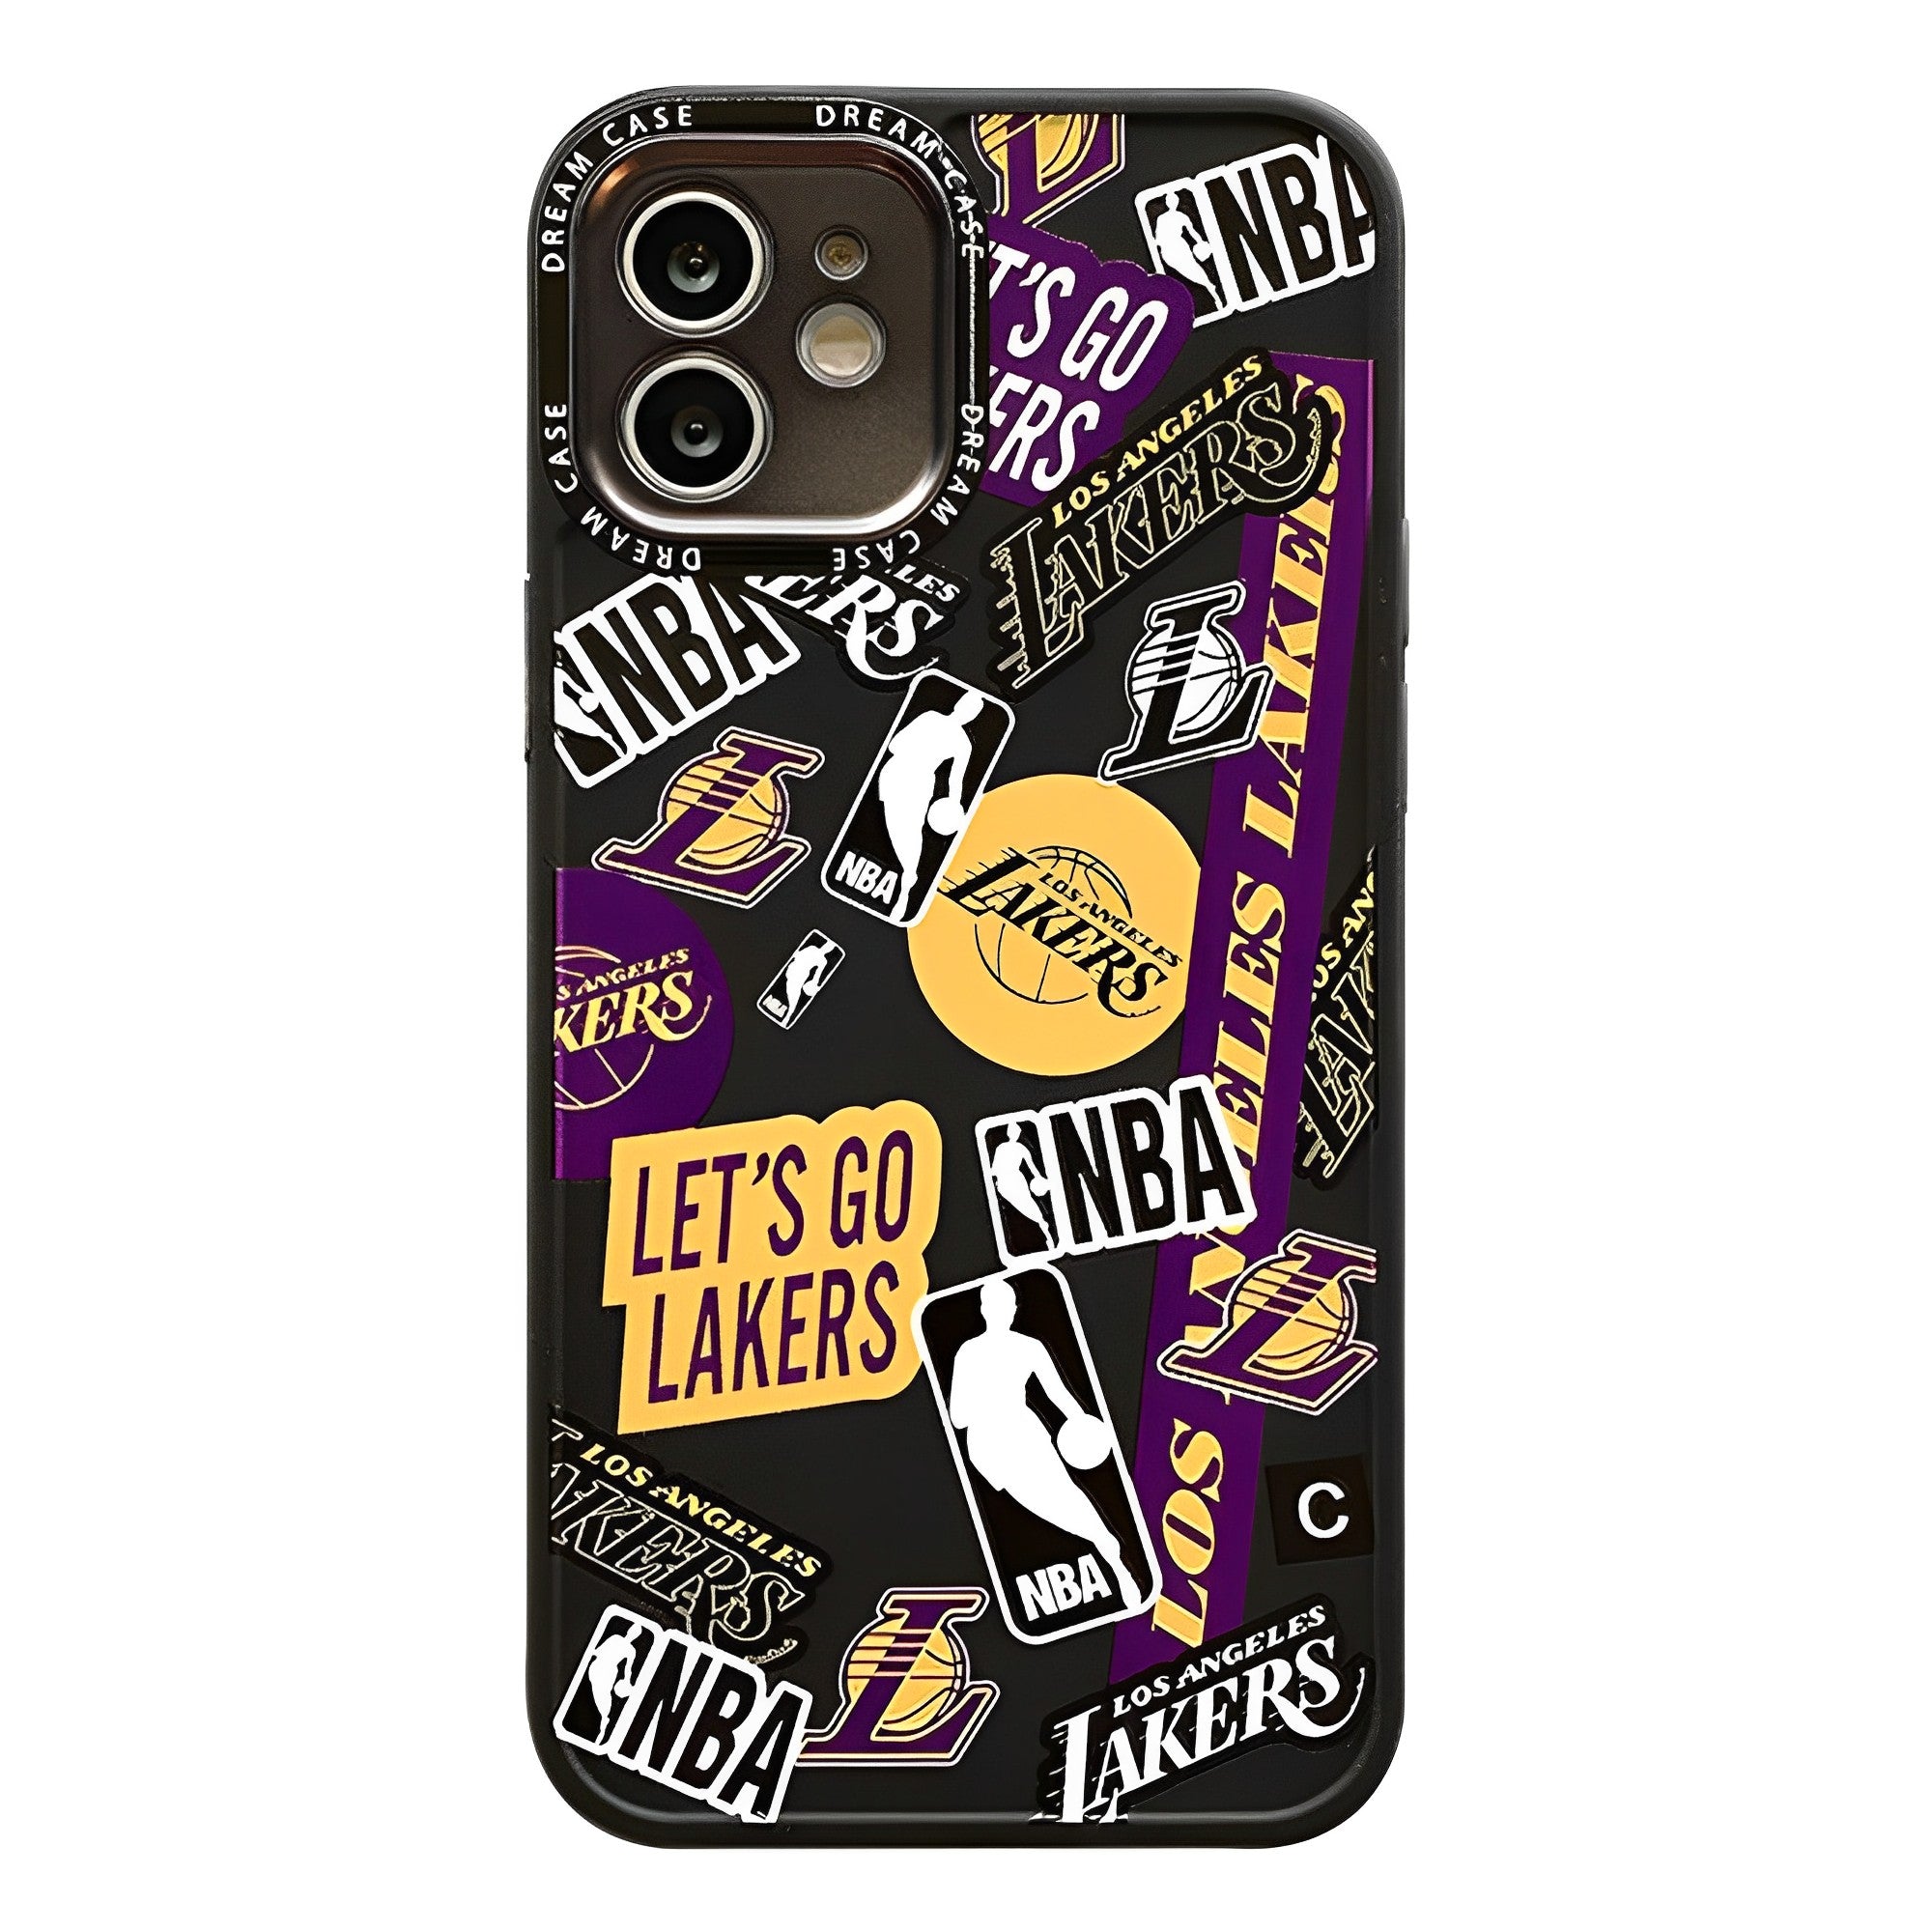 NBA iPhone case